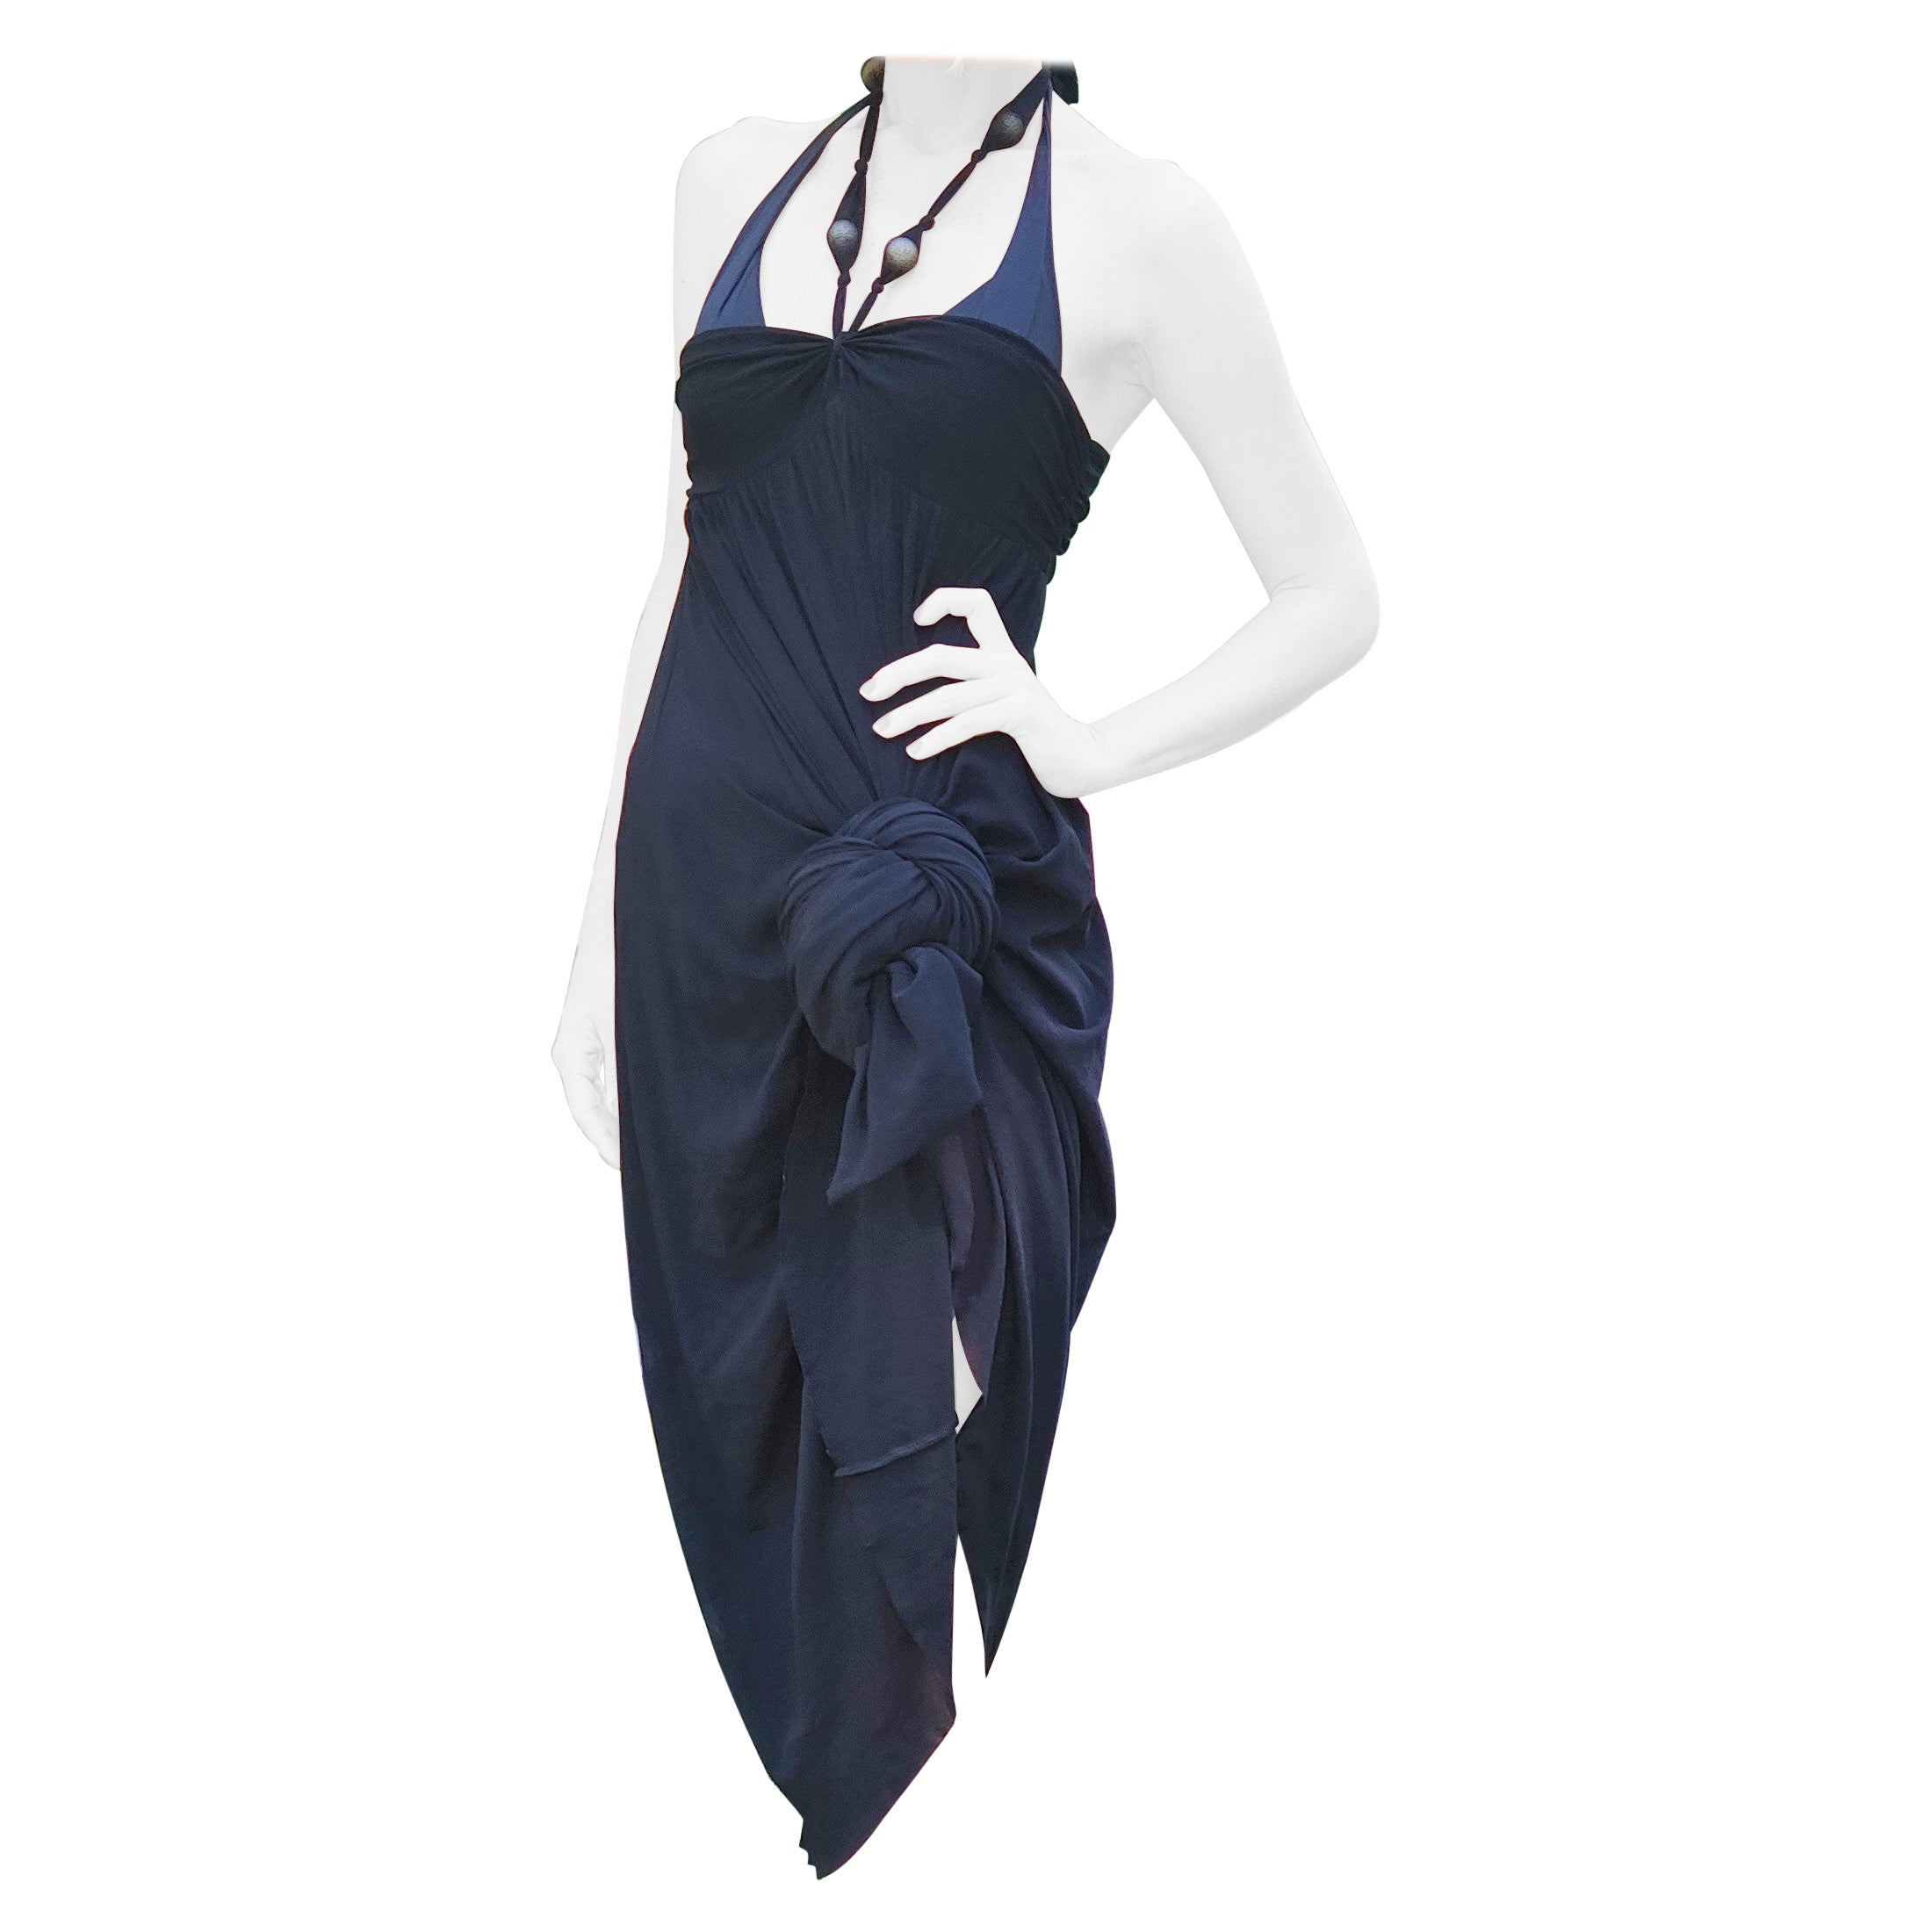 Jean Paul Gaultier Mesh Sommer Strand Abend Transparent Vintage Maxi Kleid im Angebot